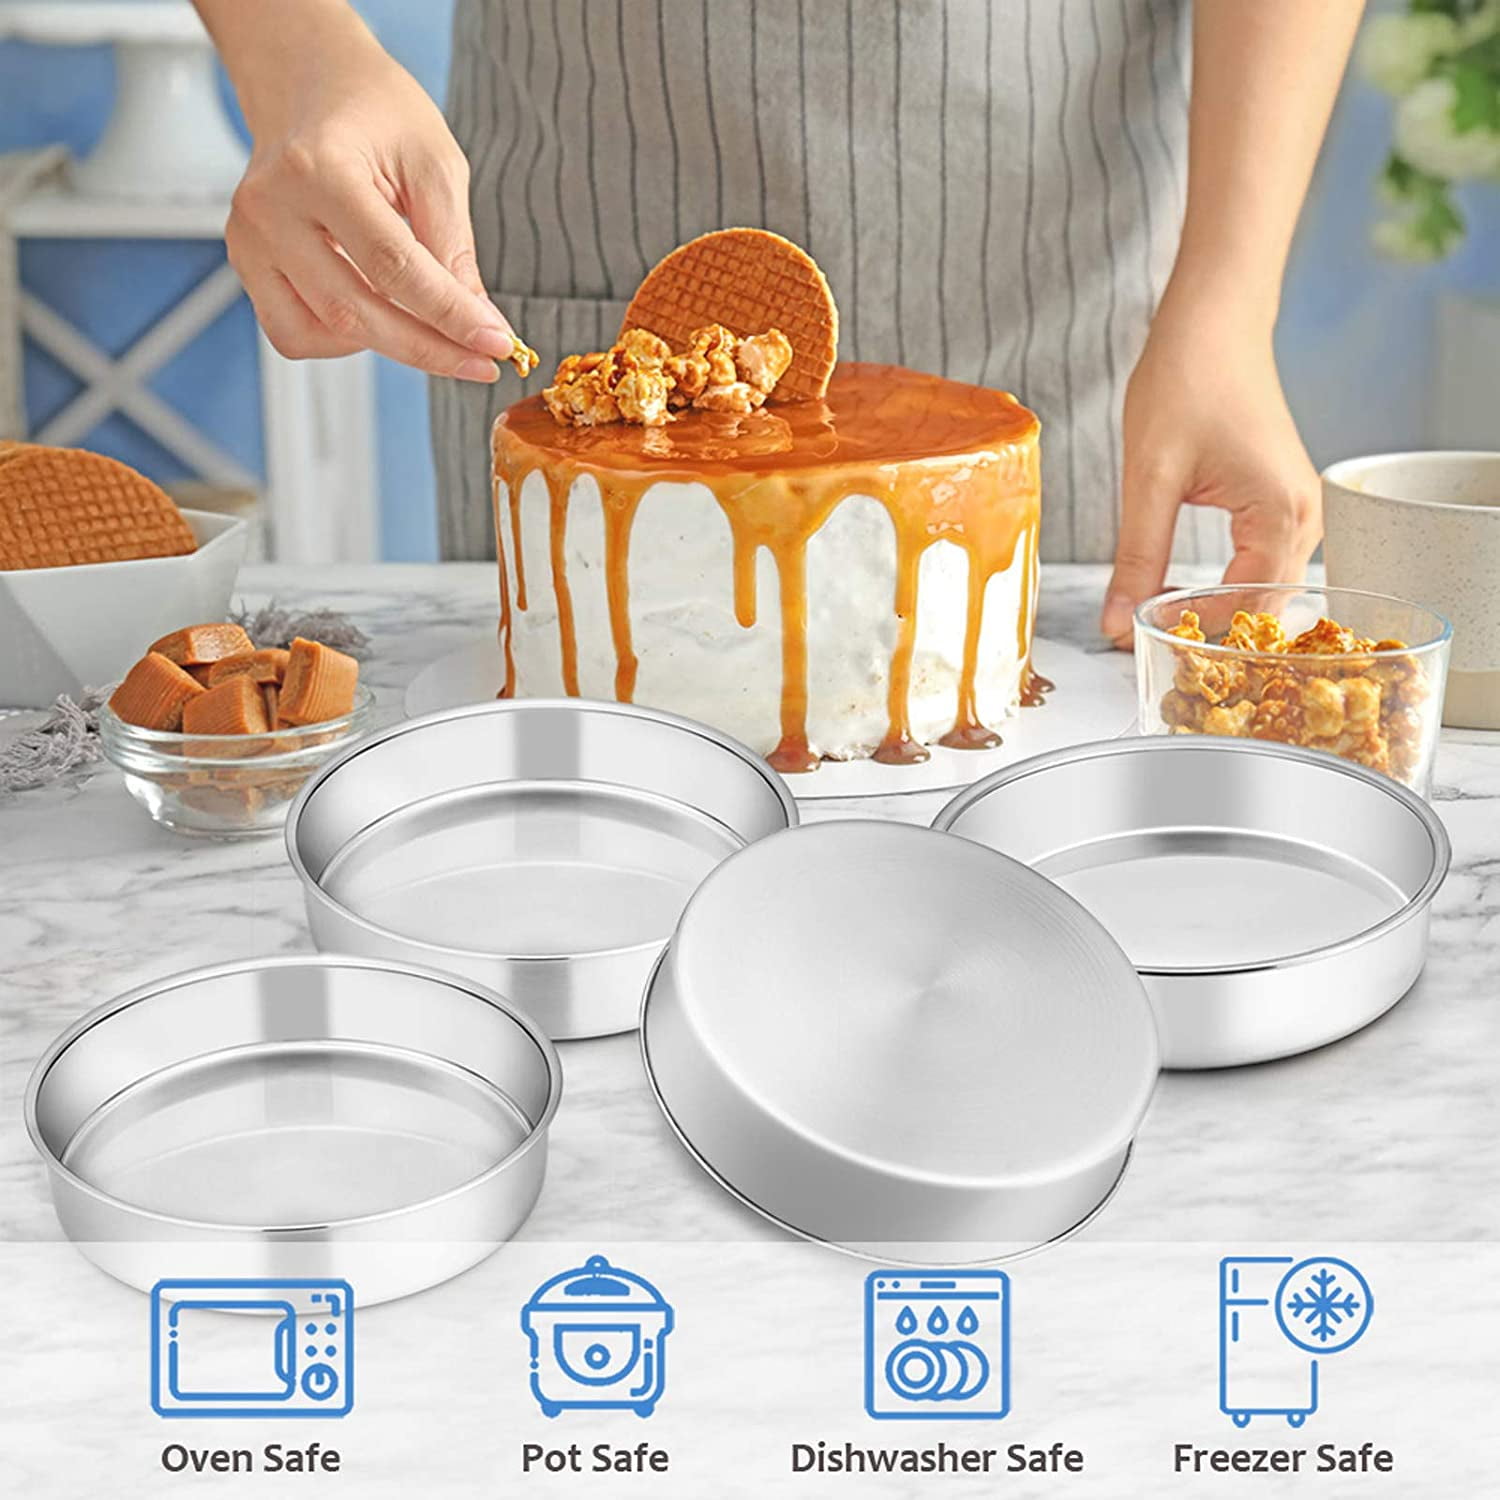 6 inch Cake Pan Set of 2, Vesteel Stainless Steel Round Cake Baking Pans, Mirror Finish & Dishwasher Safe, Size: 6½” x 2, Silver